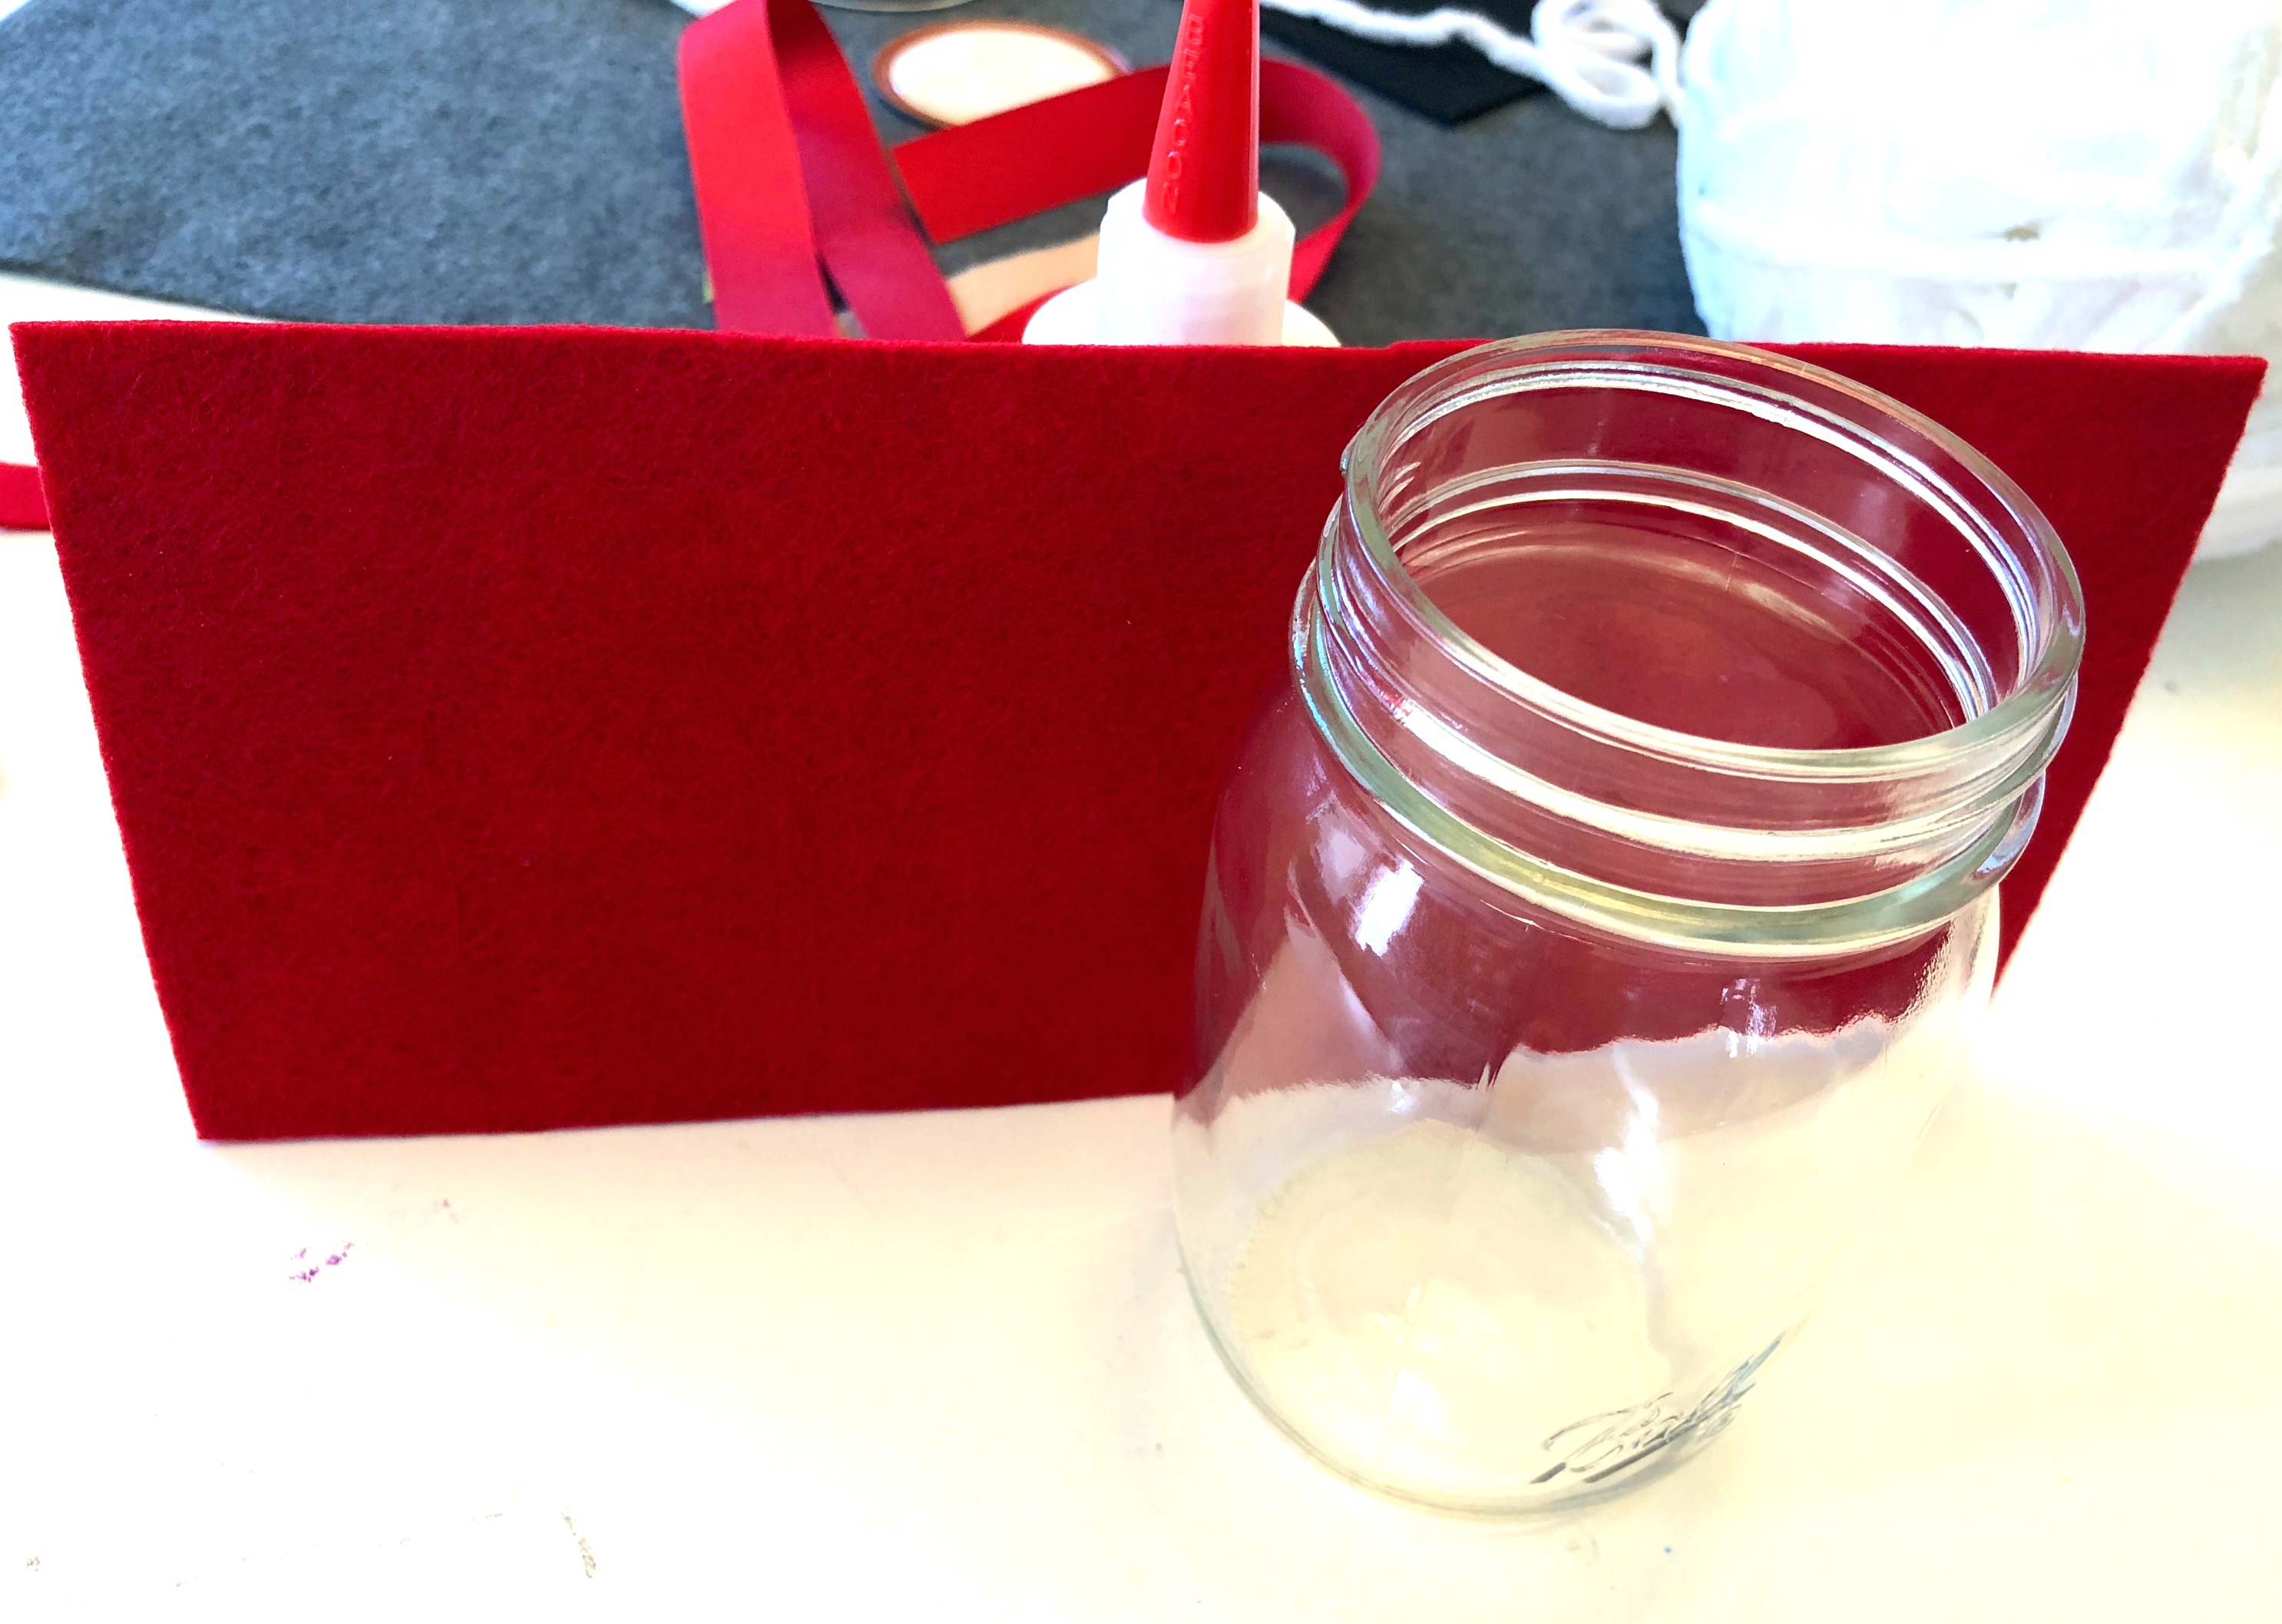 Kunin Felt (red) around jar